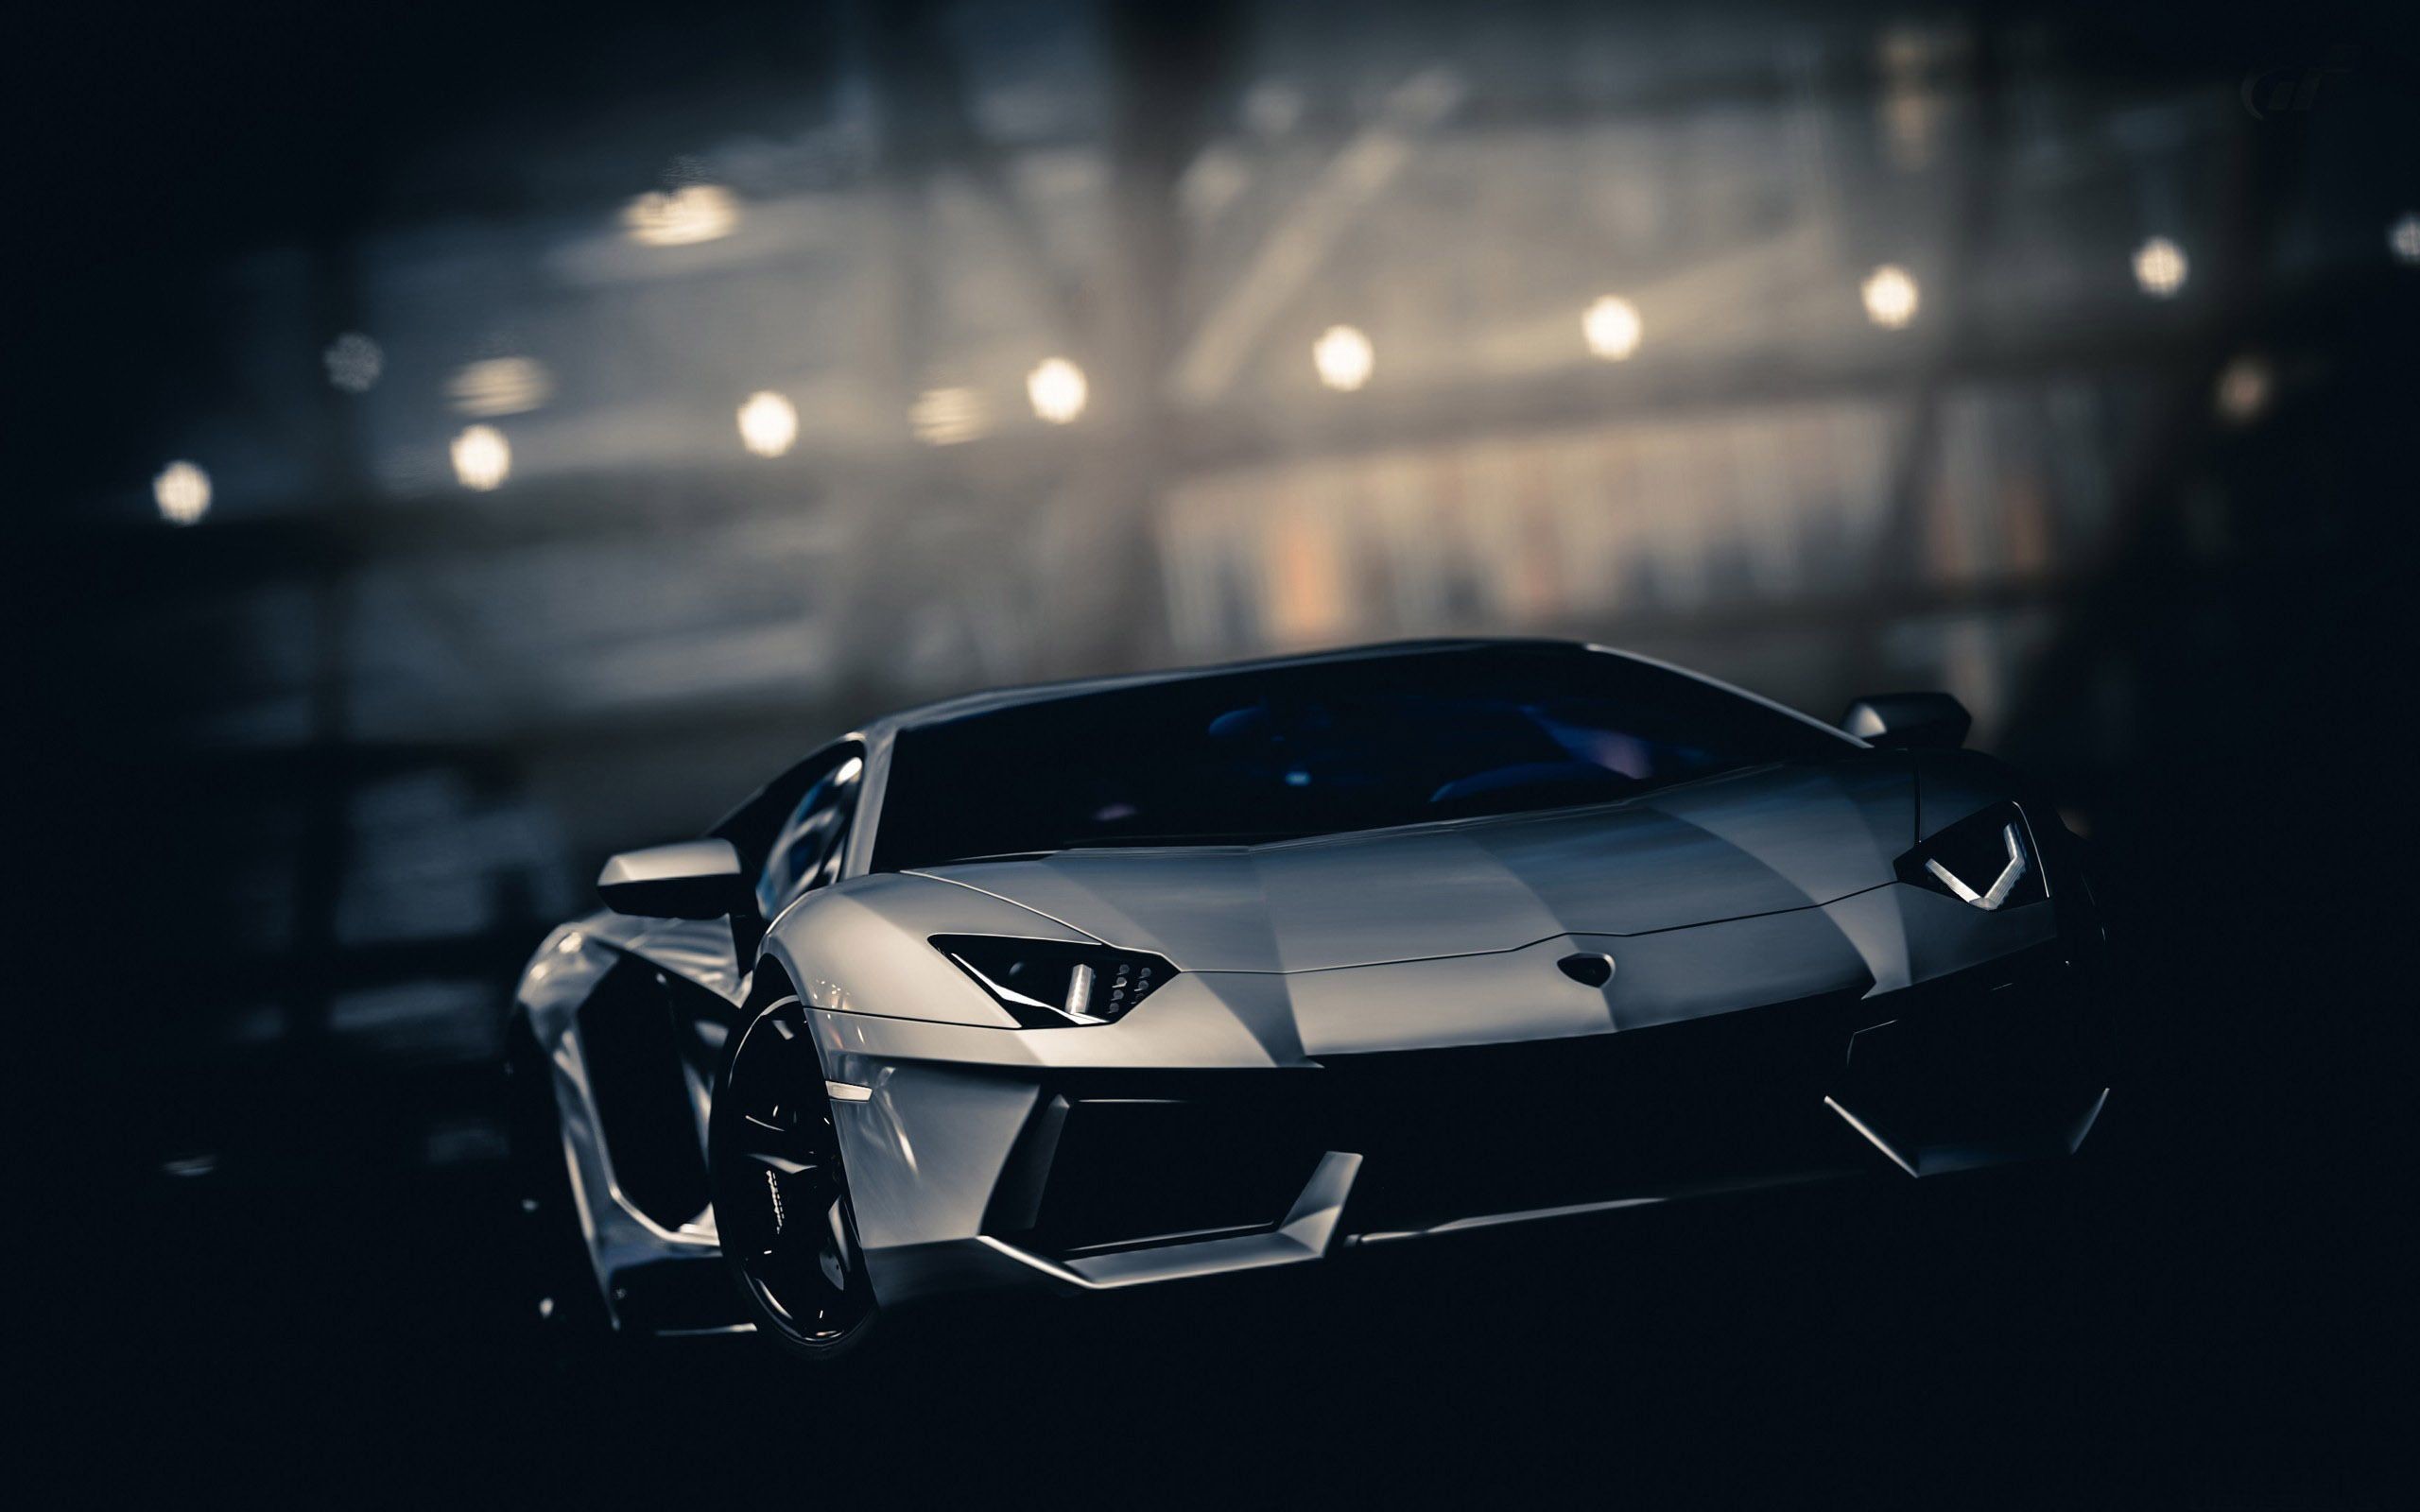 2560x1600 0 Wallpaper Lamborghini | QyGjxZ Wallpapers Full HD 1080p Lamborghini New  2015 | Wallpaper Cave